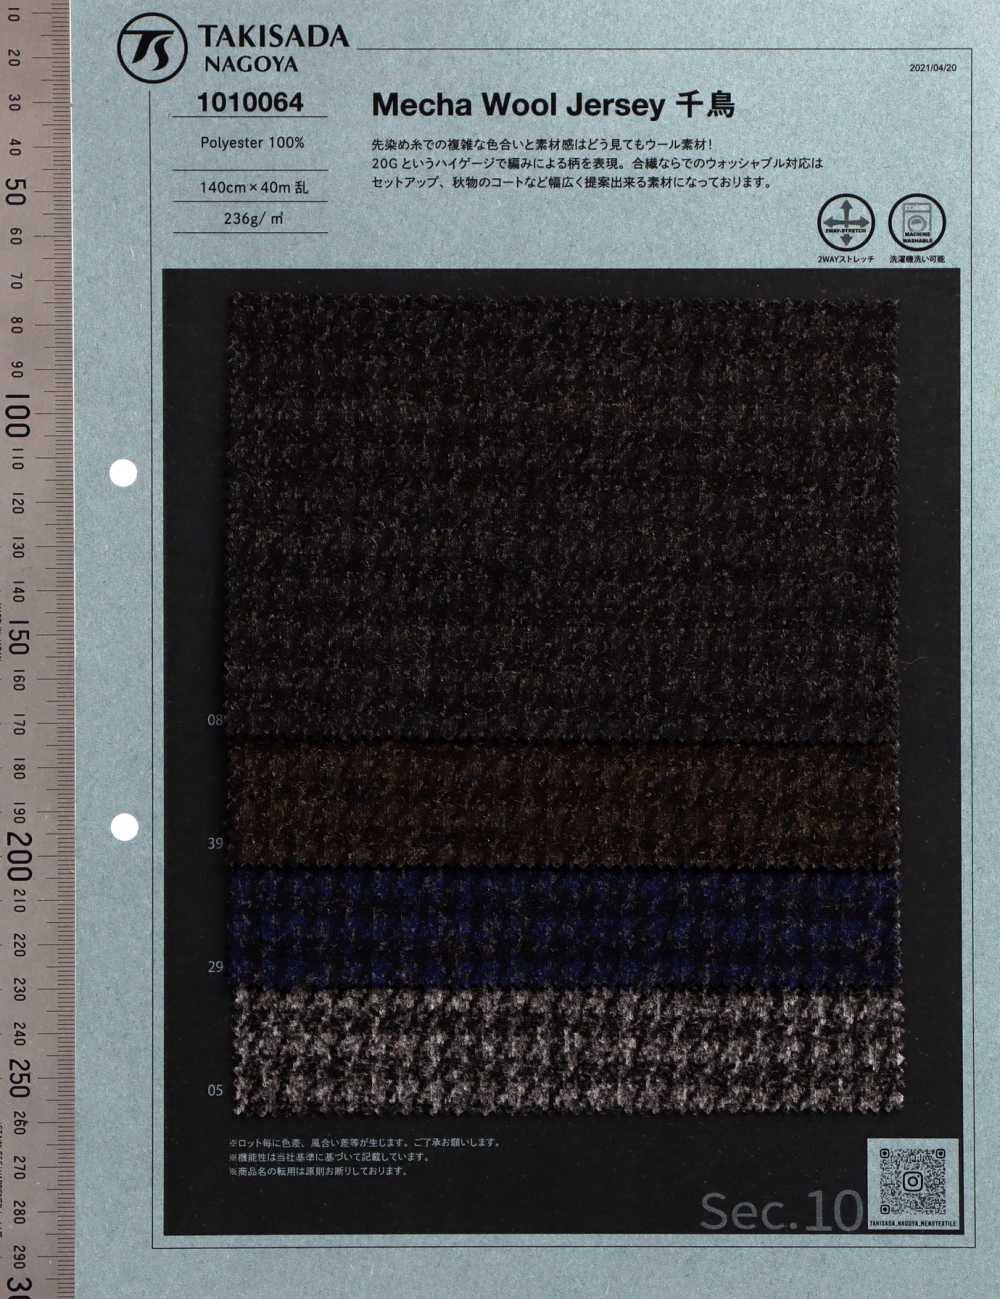 1010064 Tejido Similar A La Lana Punto Pata De Gallo[Fabrica Textil] Takisada Nagoya